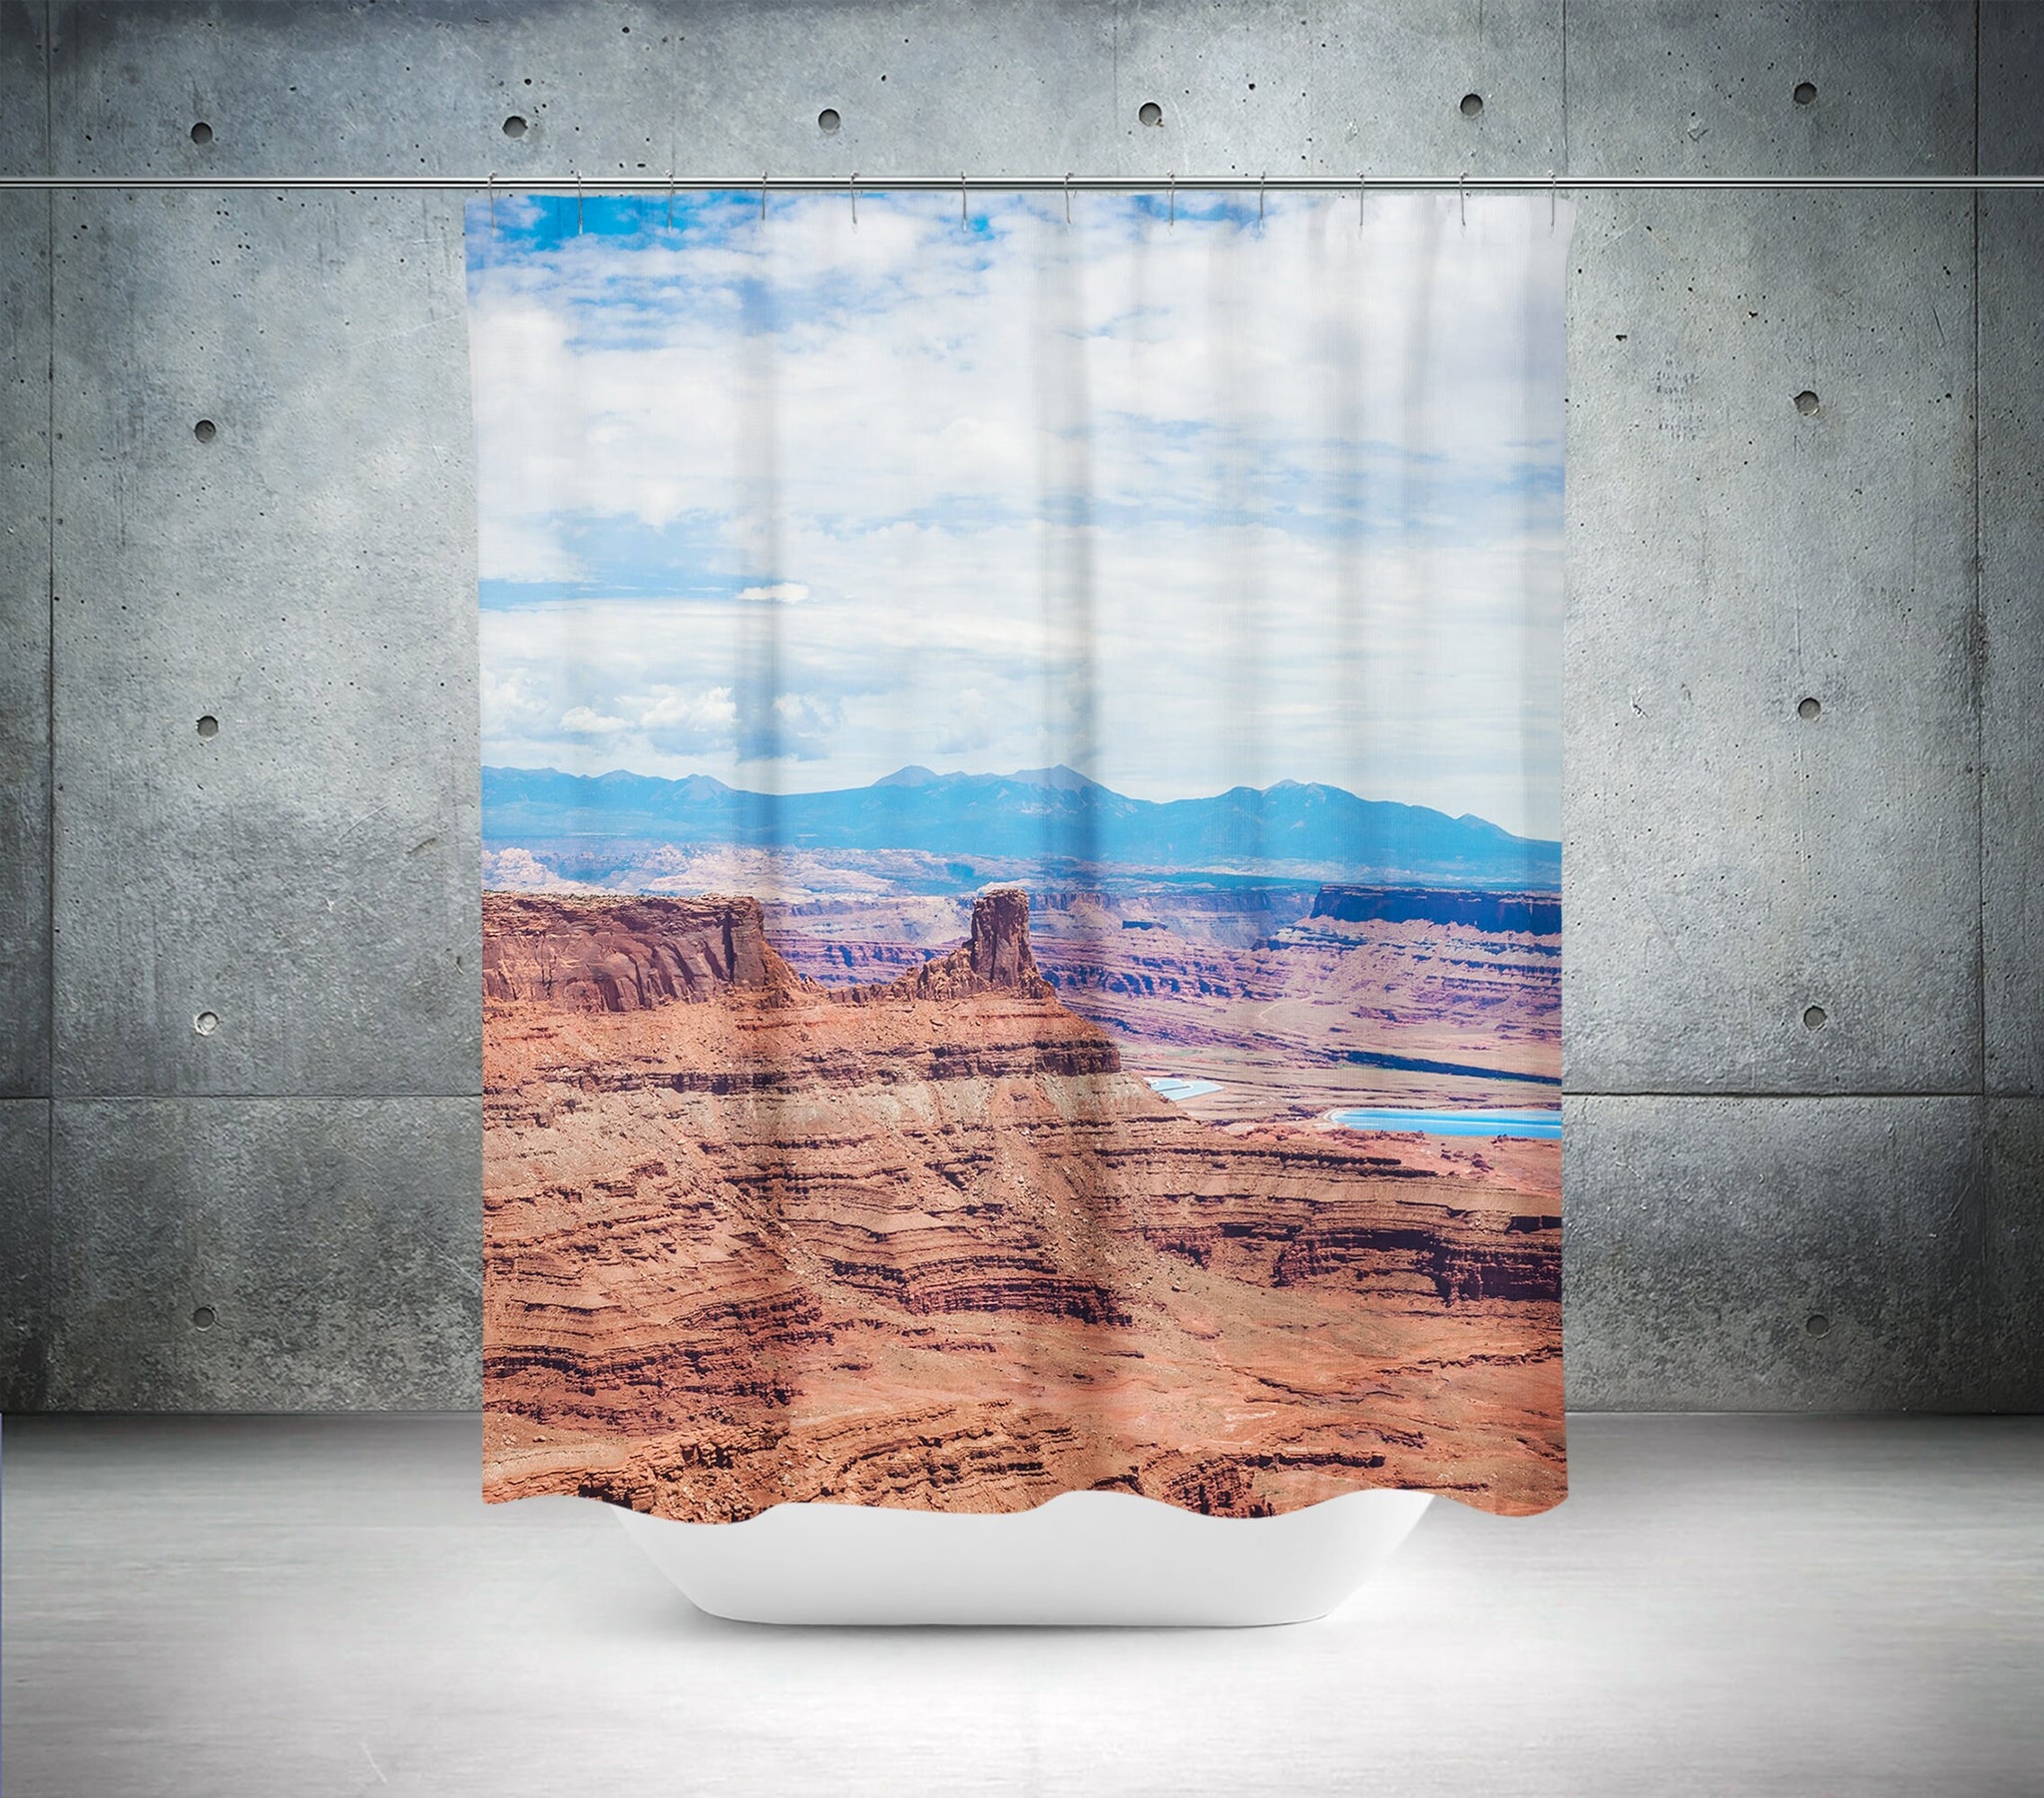 Canyonlands Desert Shower Curtain 71x74 inch Southwest Decor